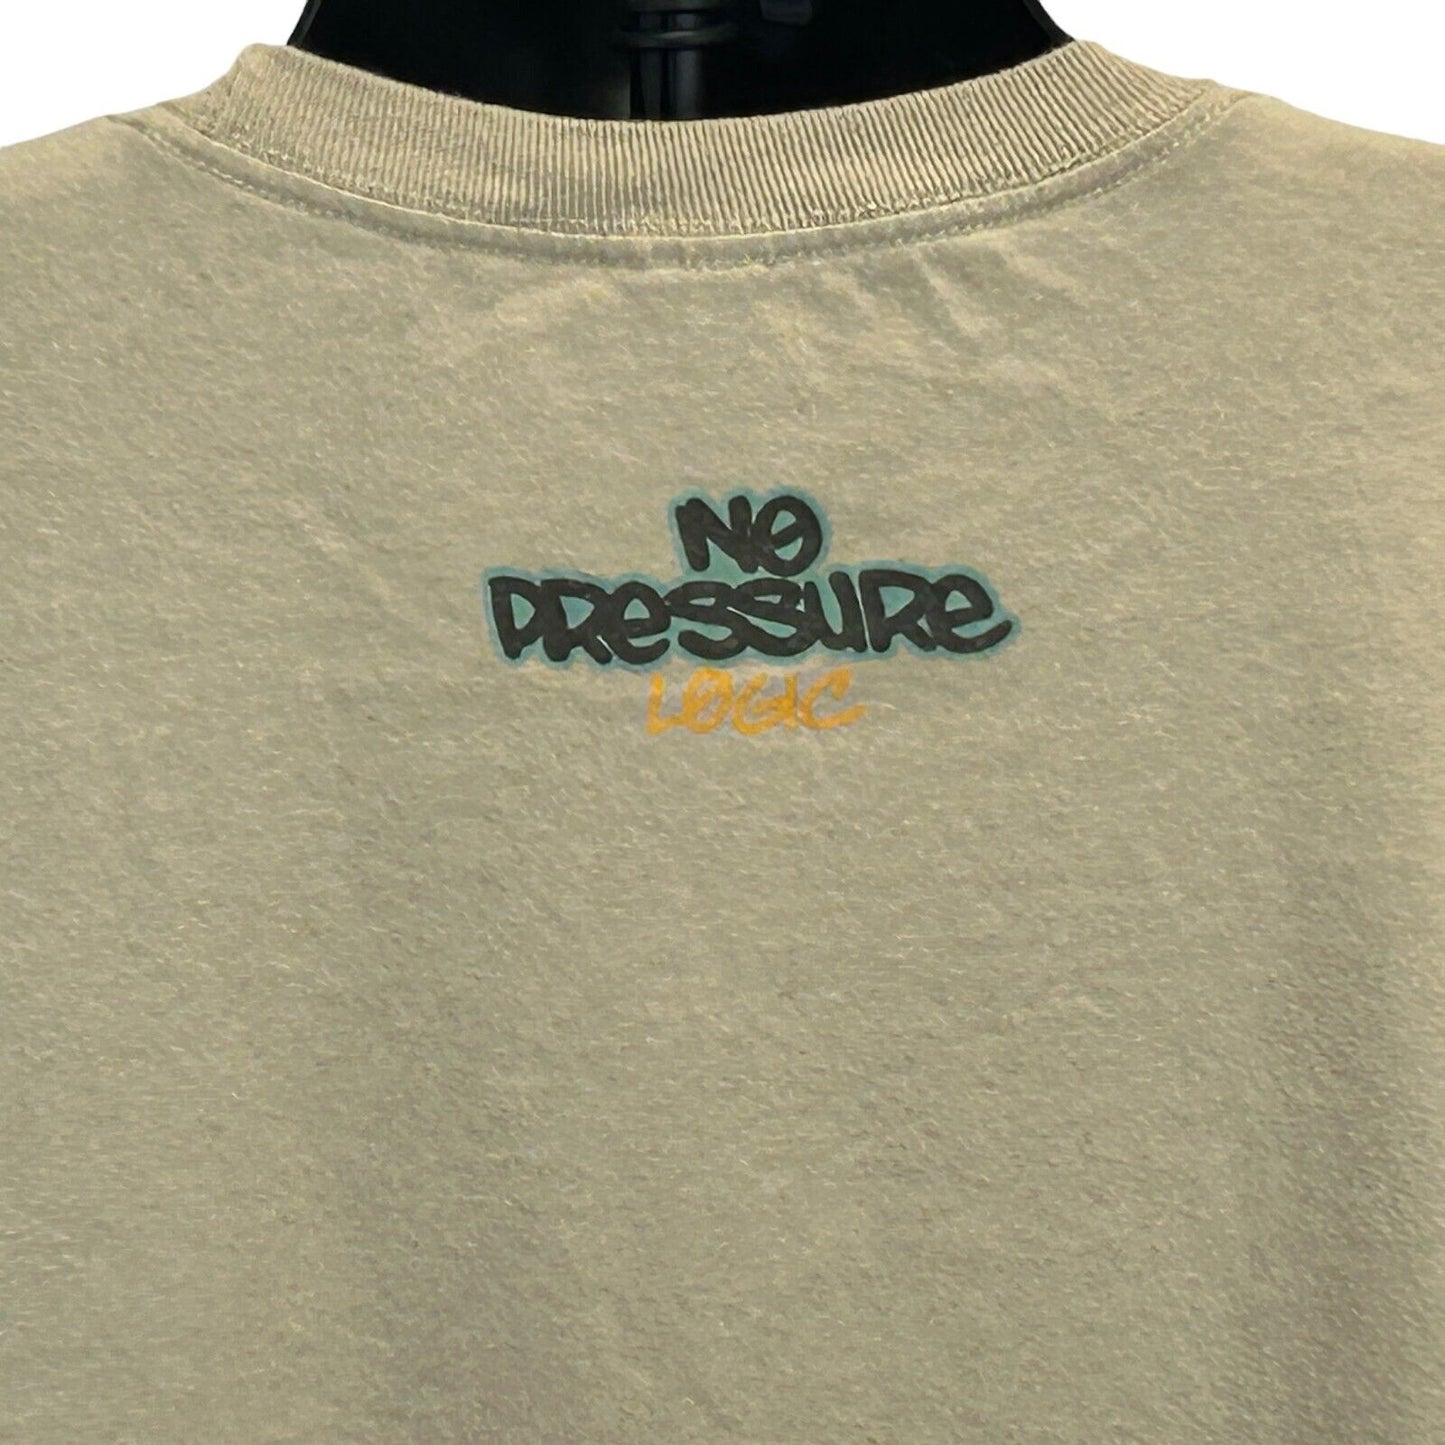 Logic No Pressure T Shirt Rap Hip Hop Beige Short Sleeve Graphic Tee 2XL XXL